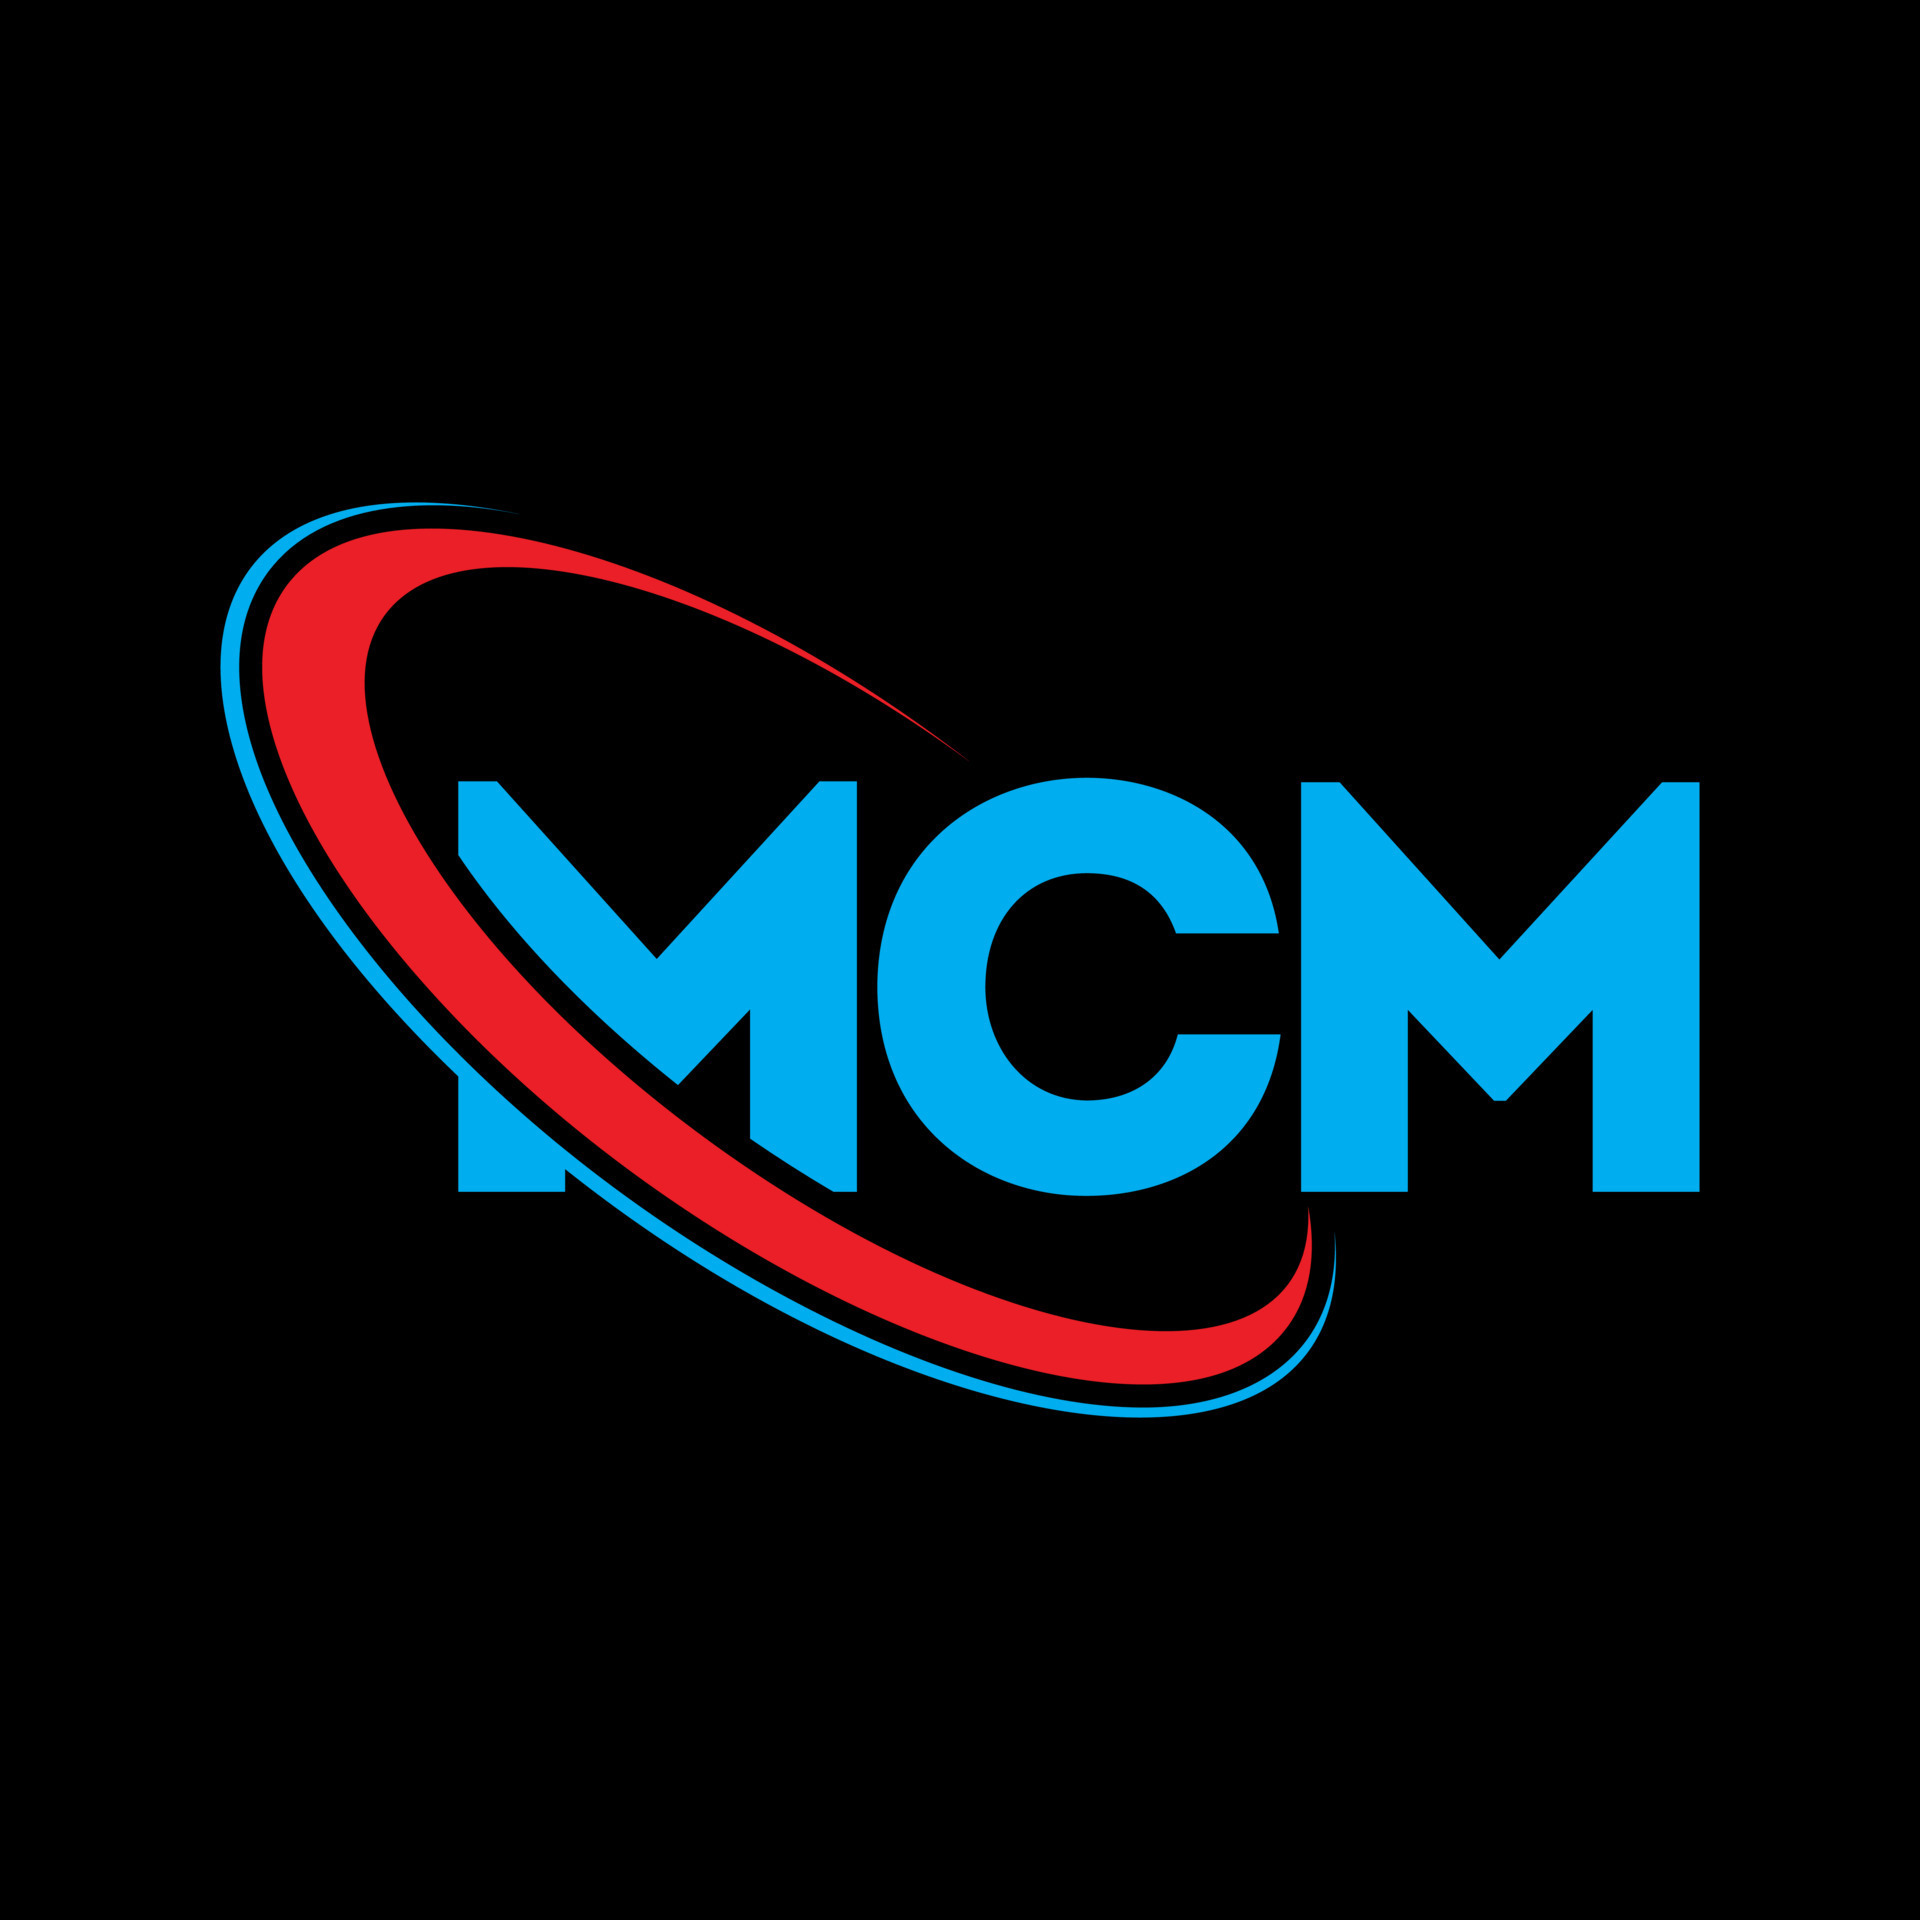 Mcm Logo Design Inspiration Unique Identity Stock Vector (Royalty Free)  2363635967